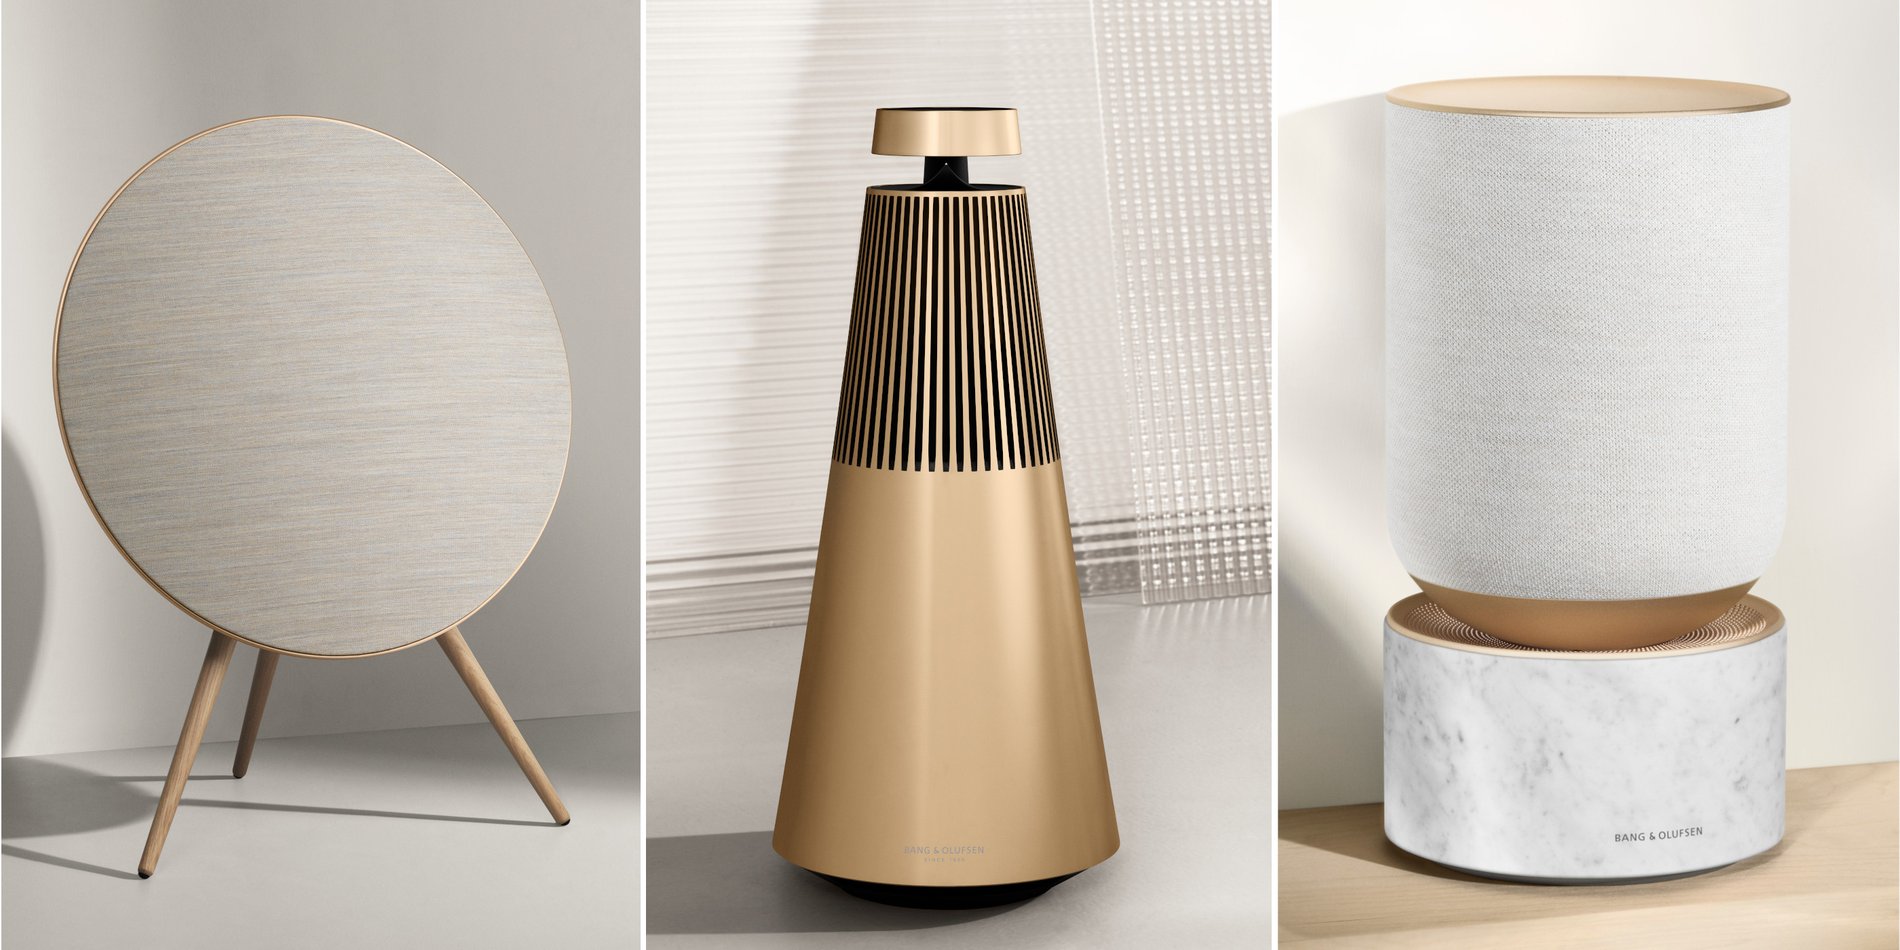 Golden headphones and speakers by Bang & Olufsen